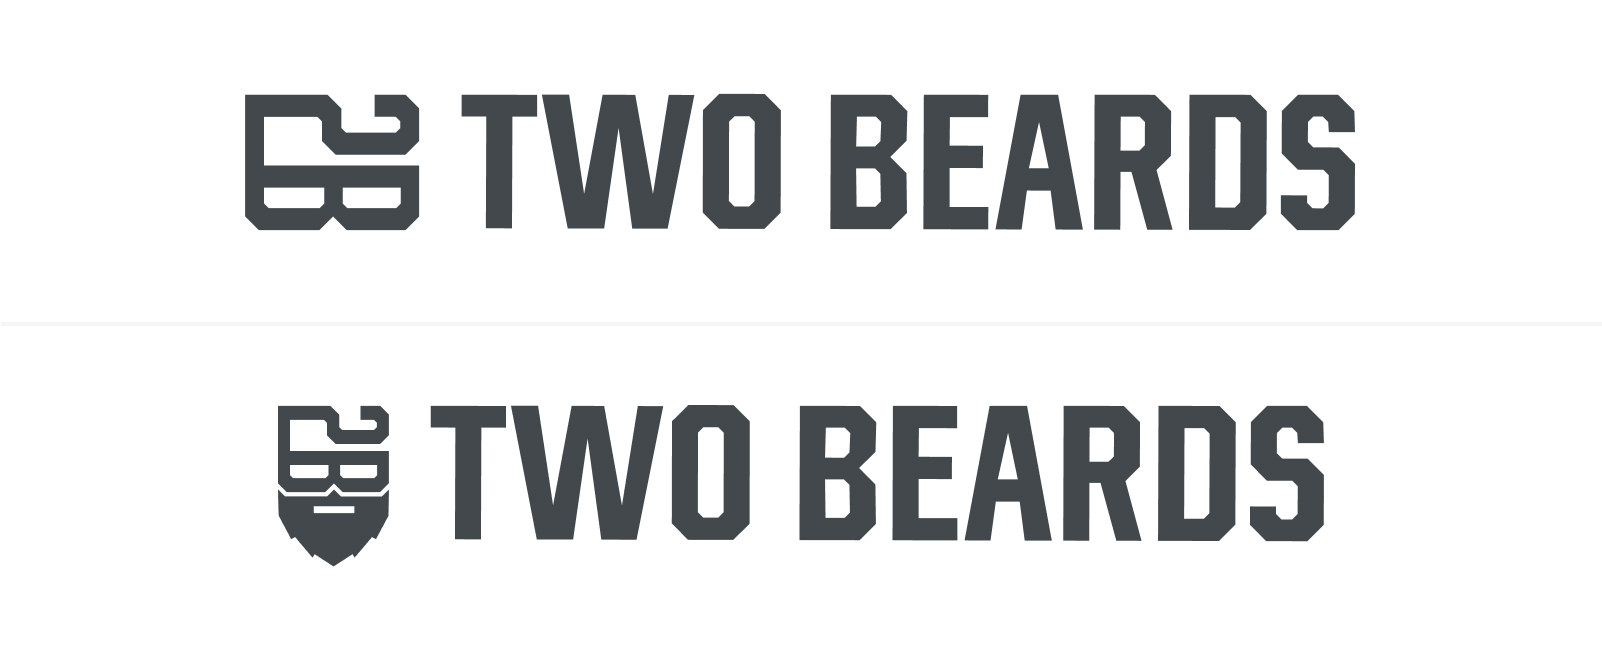 .Alternate Two Beards Logos